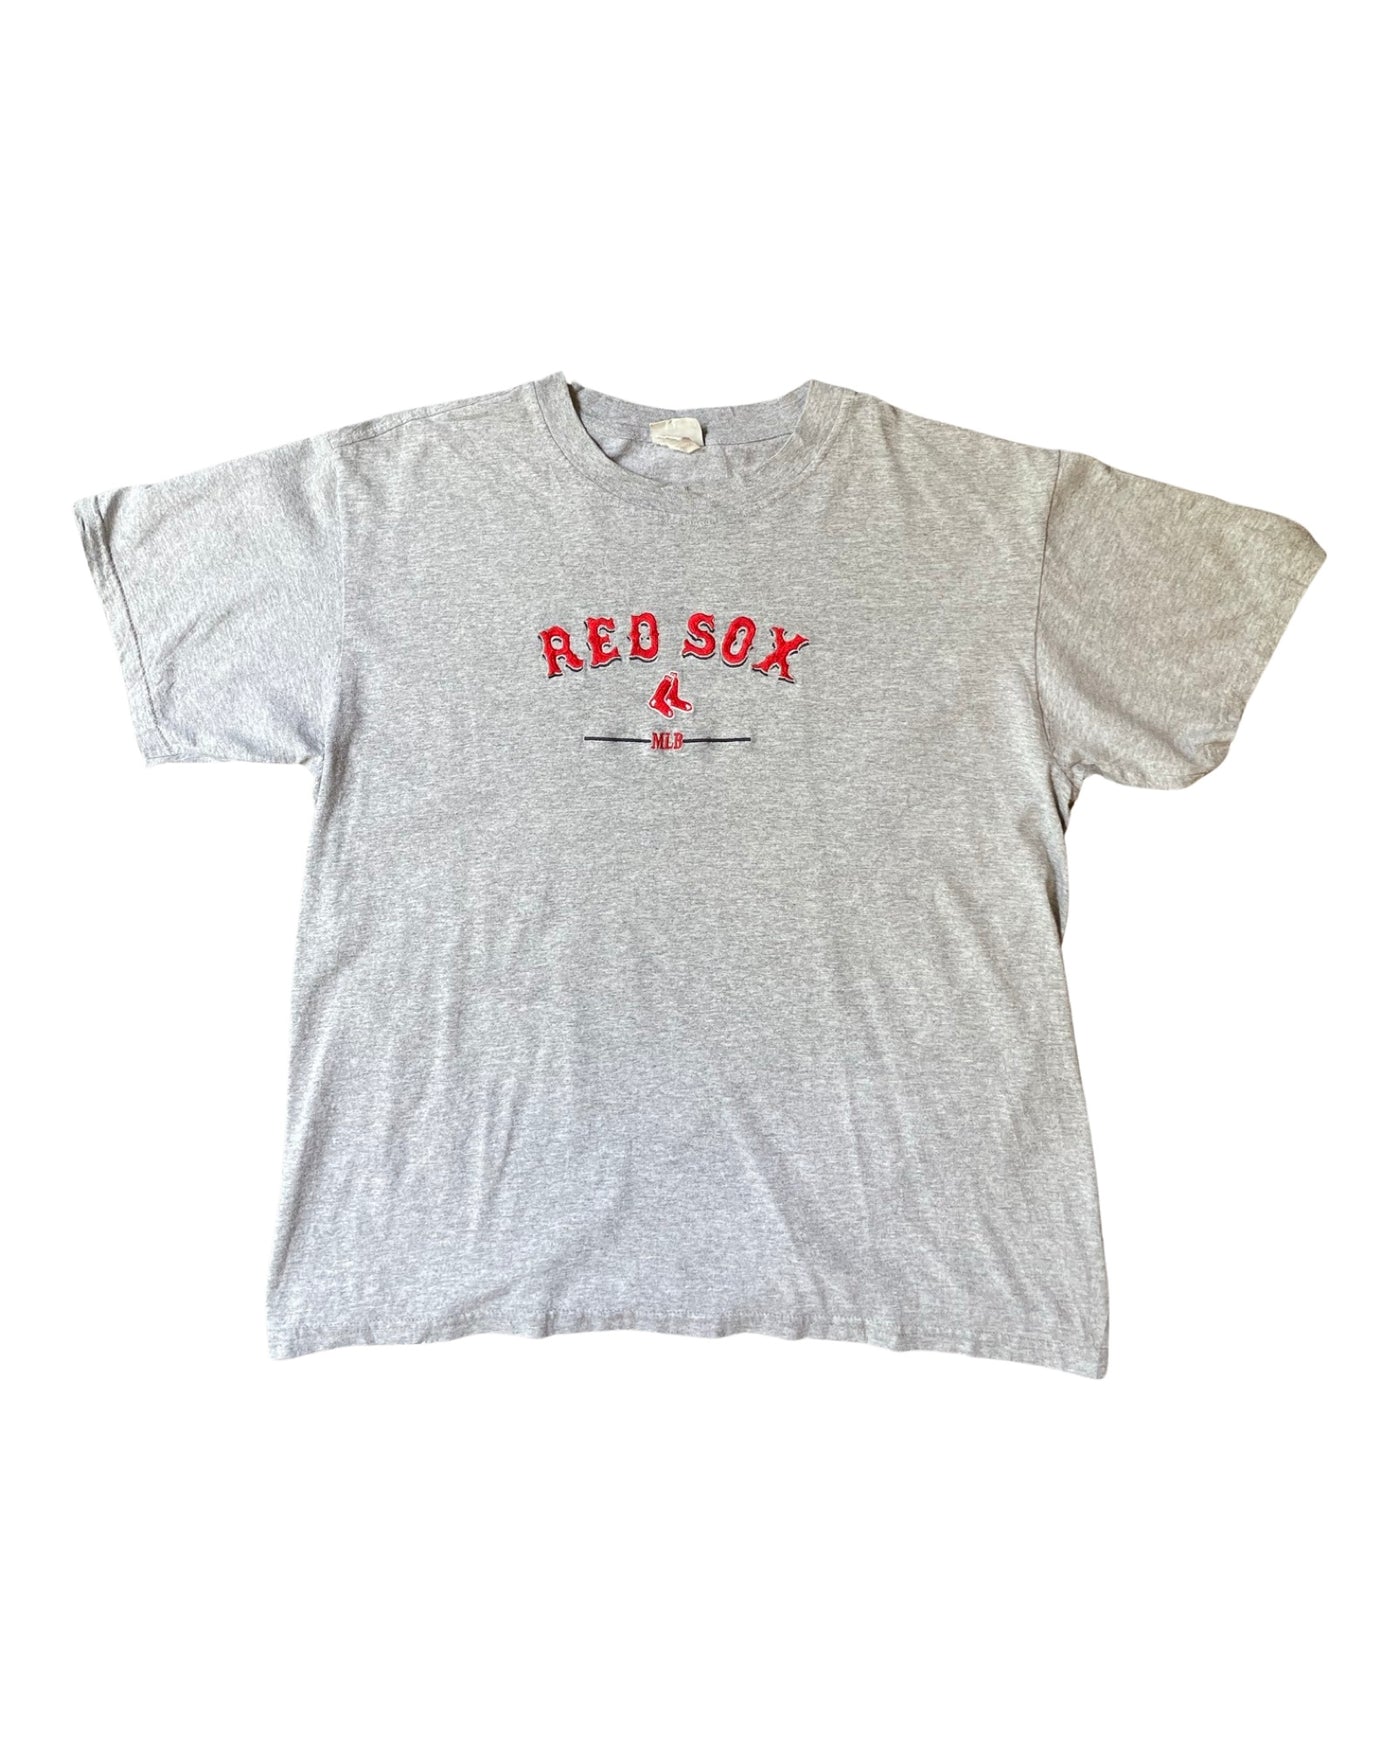 Vintage MLB Red Sox T-Shirt Size L